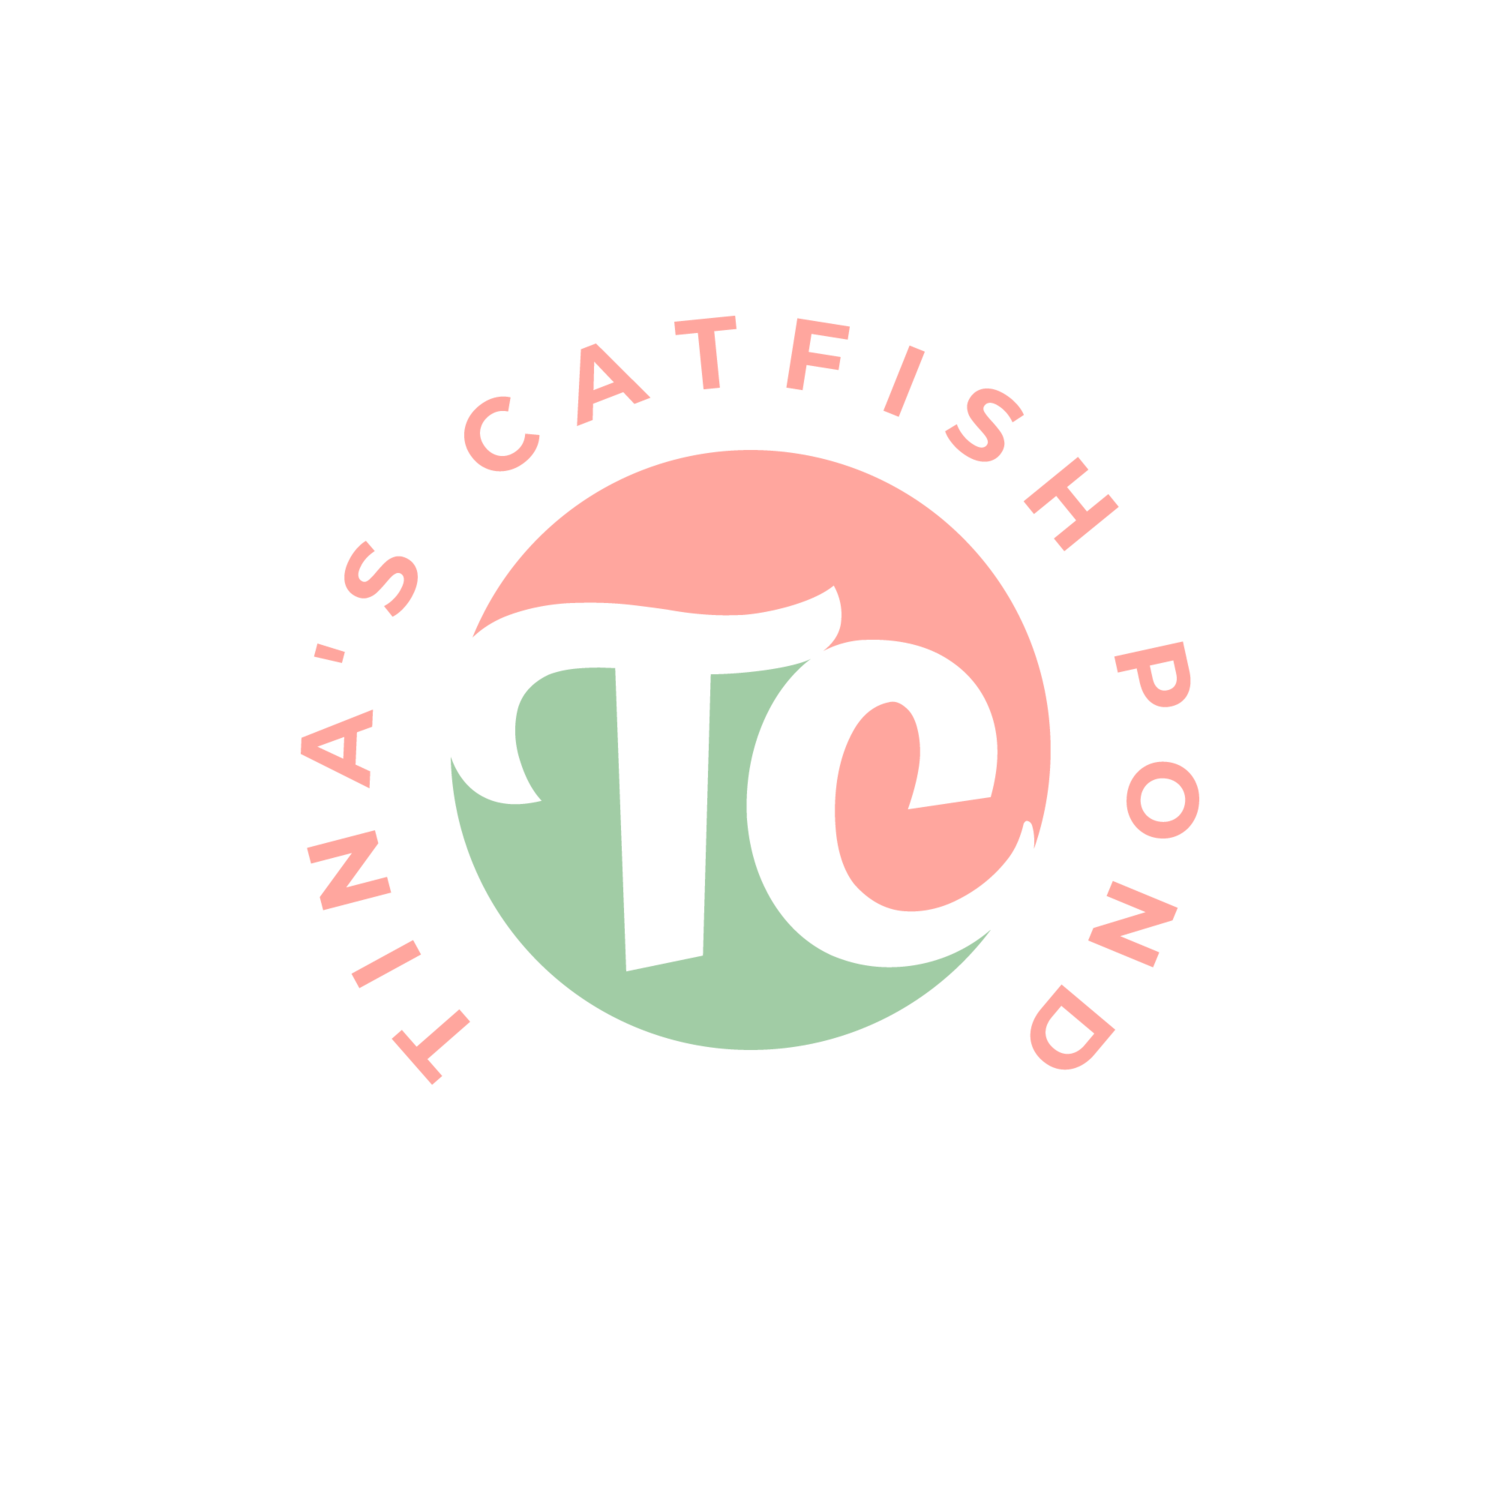 Catfish Services